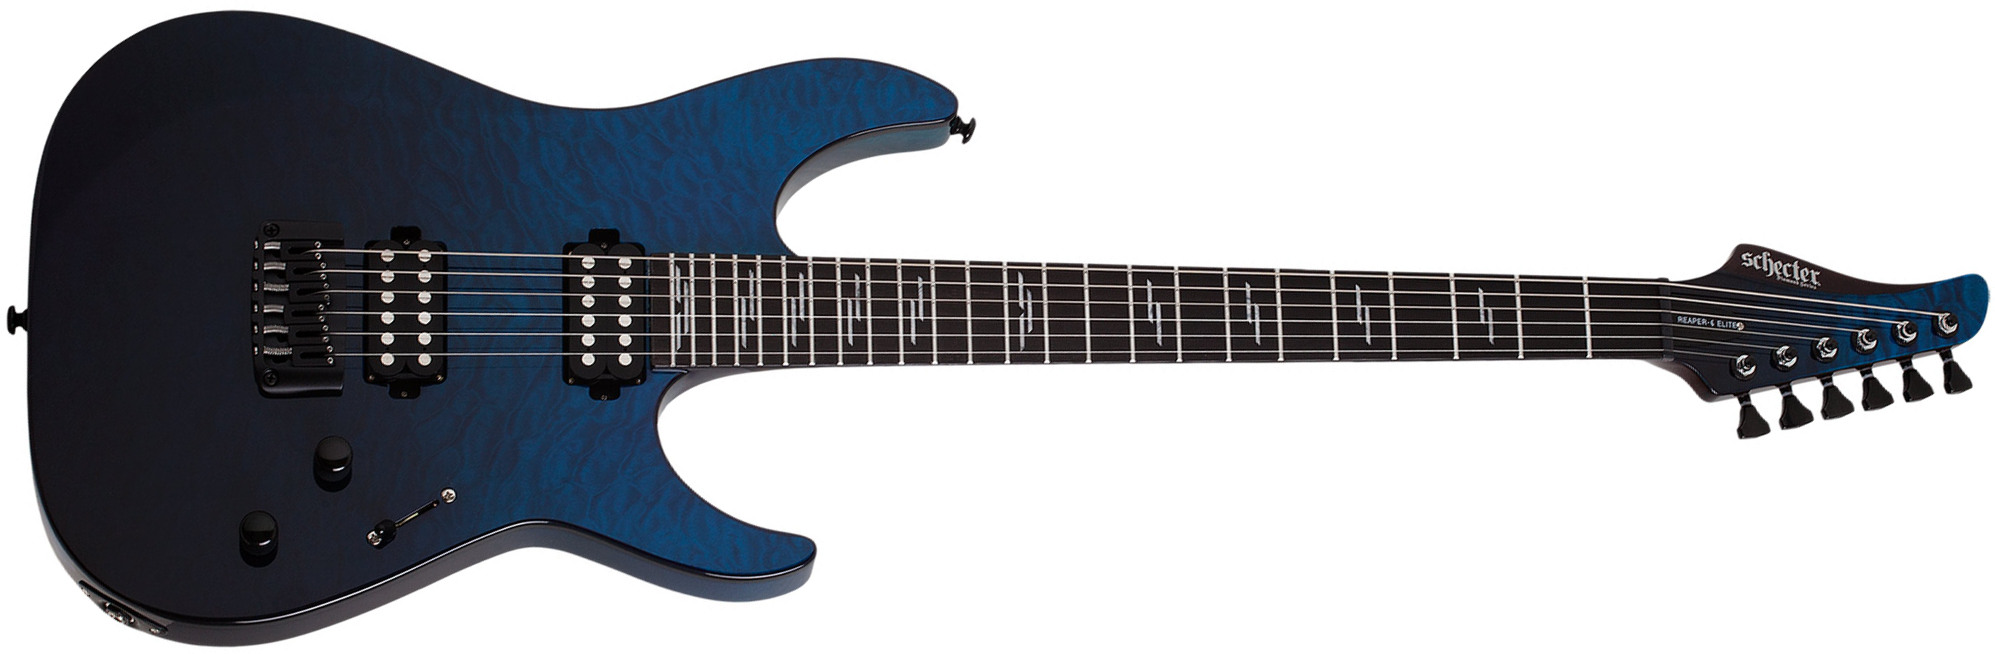 Schecter Reaper-6 Elite 2h Ht Eb - Deep Blue Ocean - Str shape electric guitar - Main picture